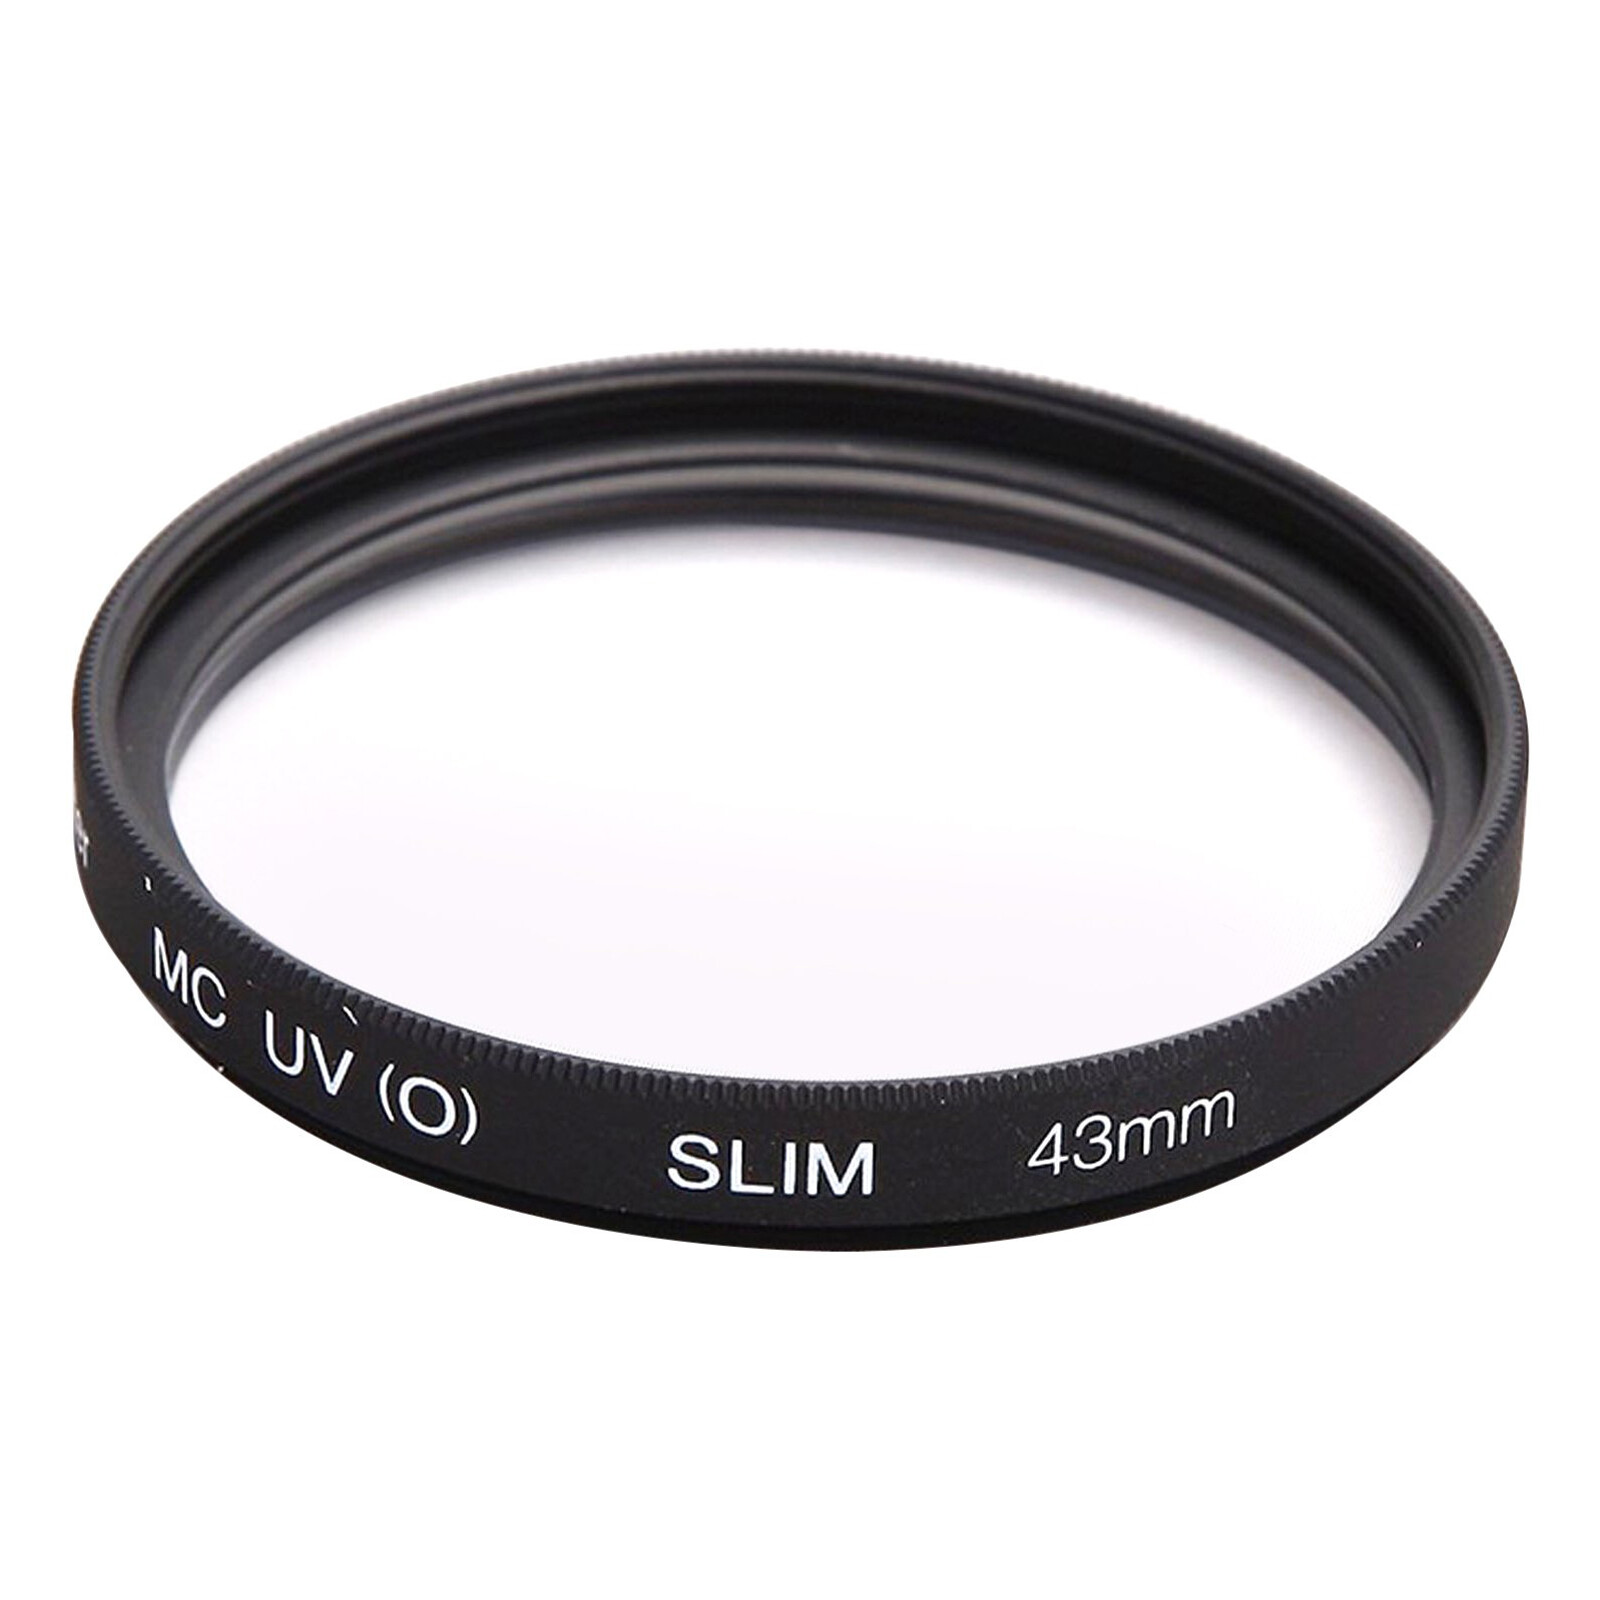 Canon EF-M 32/1,4 STM + UV Filter